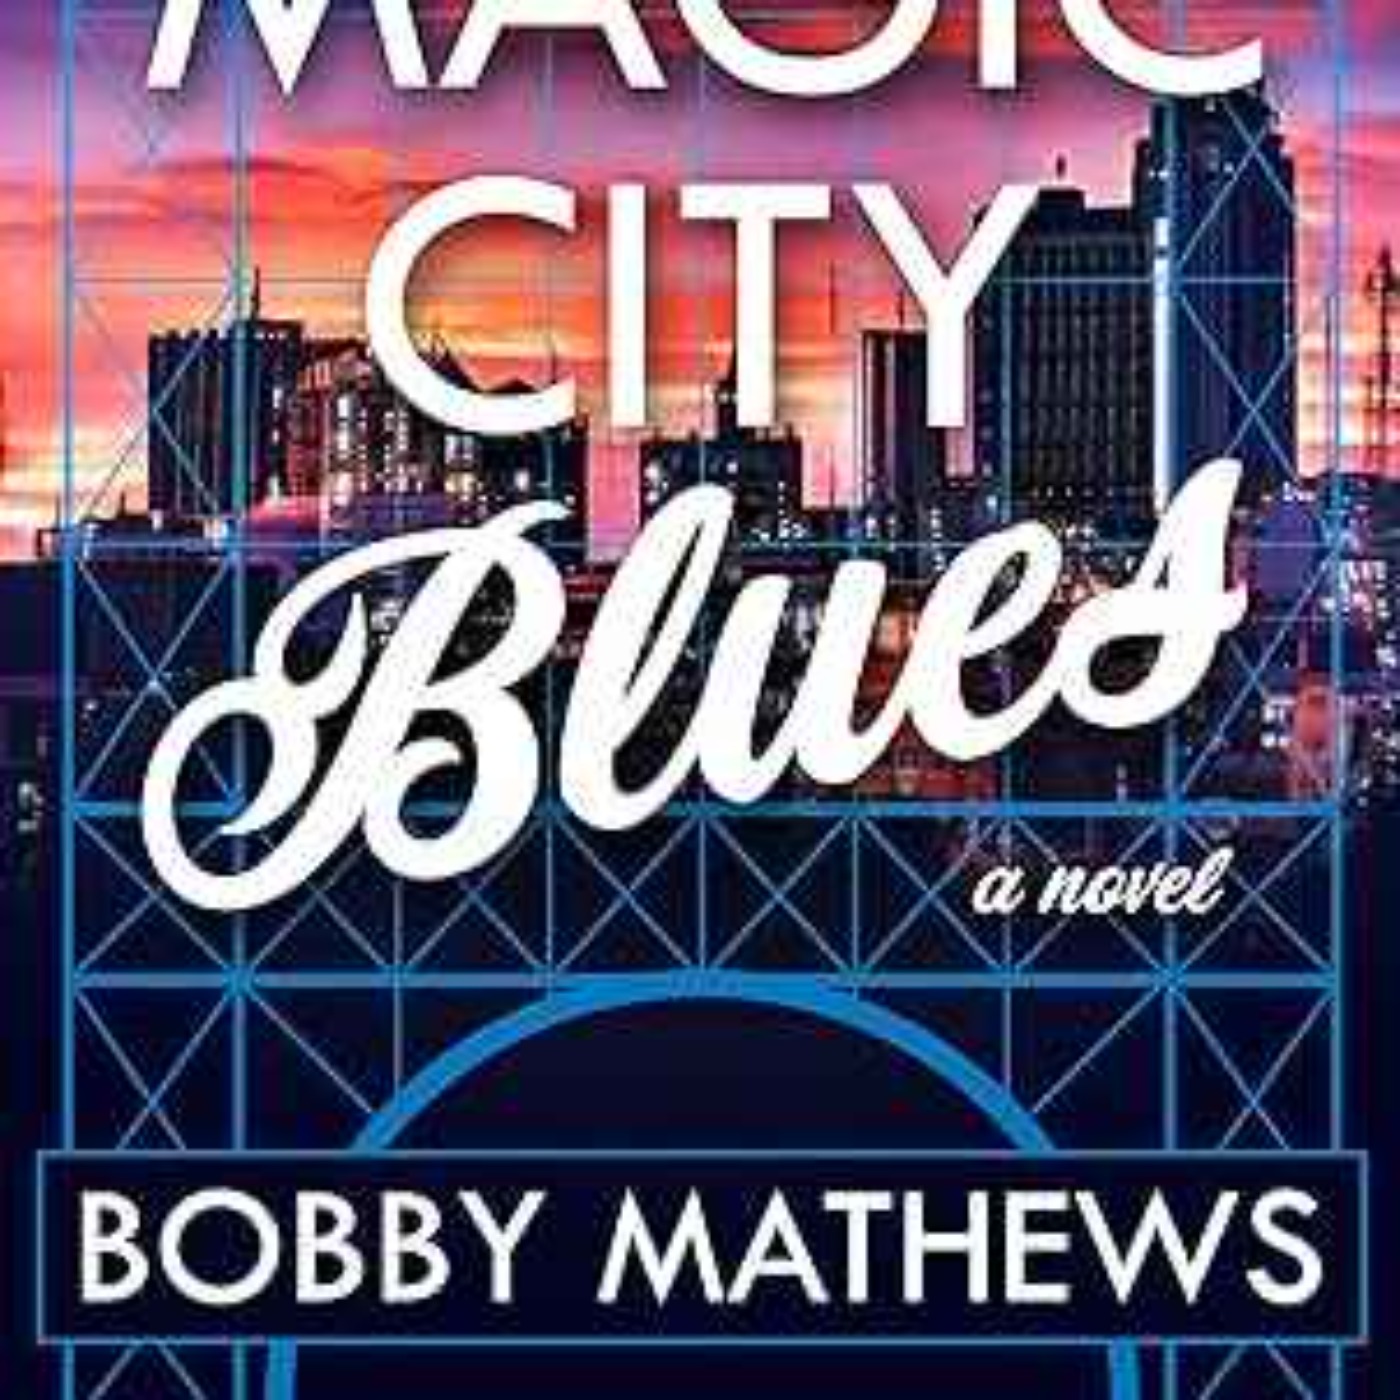 Bobby Mathews - Magic City Blues